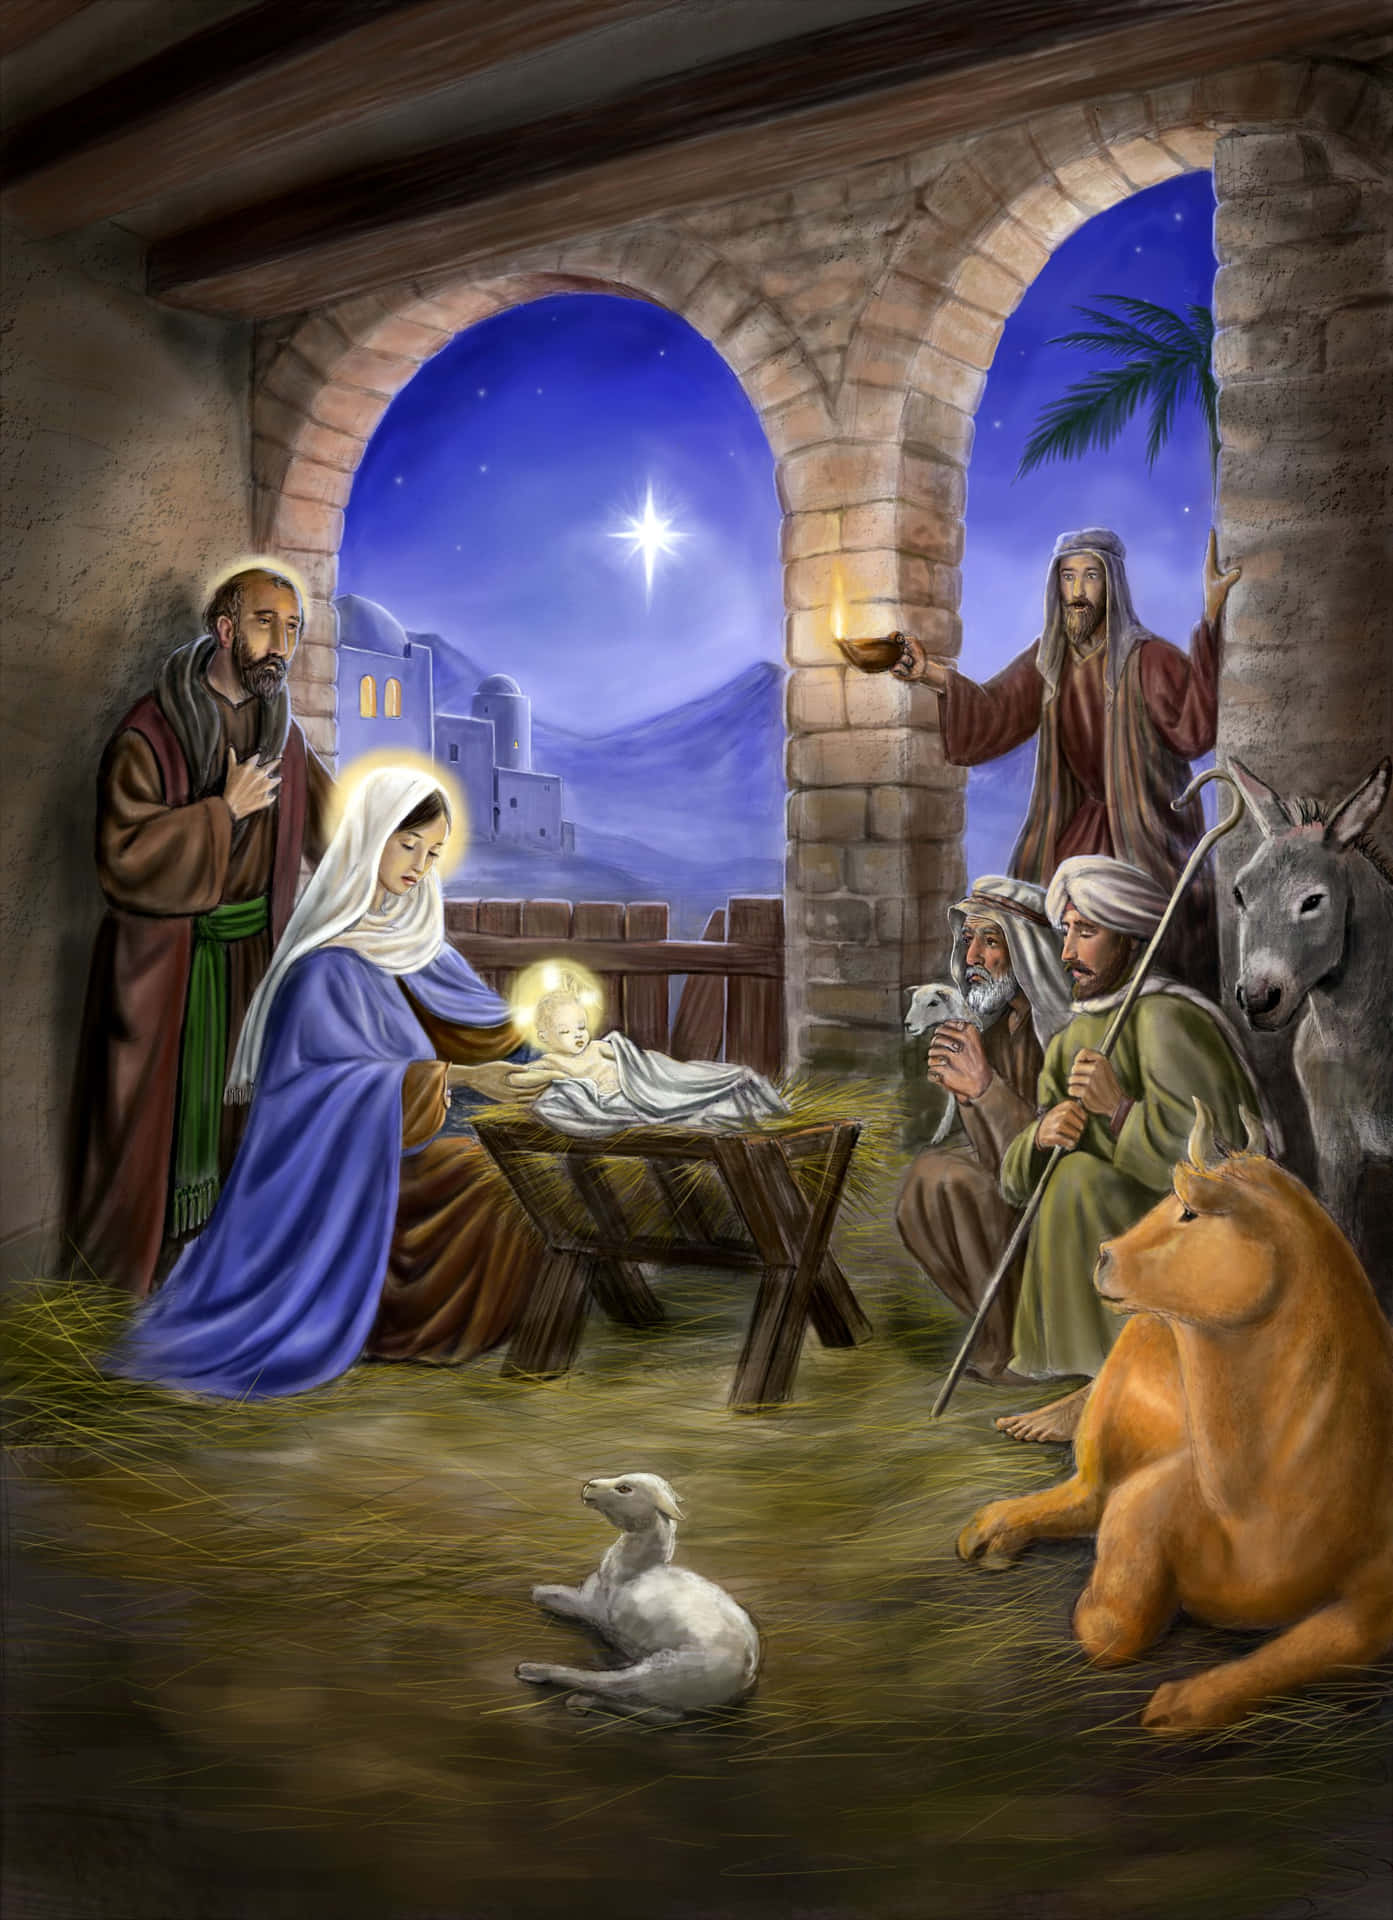 The Beauty of the Nativity